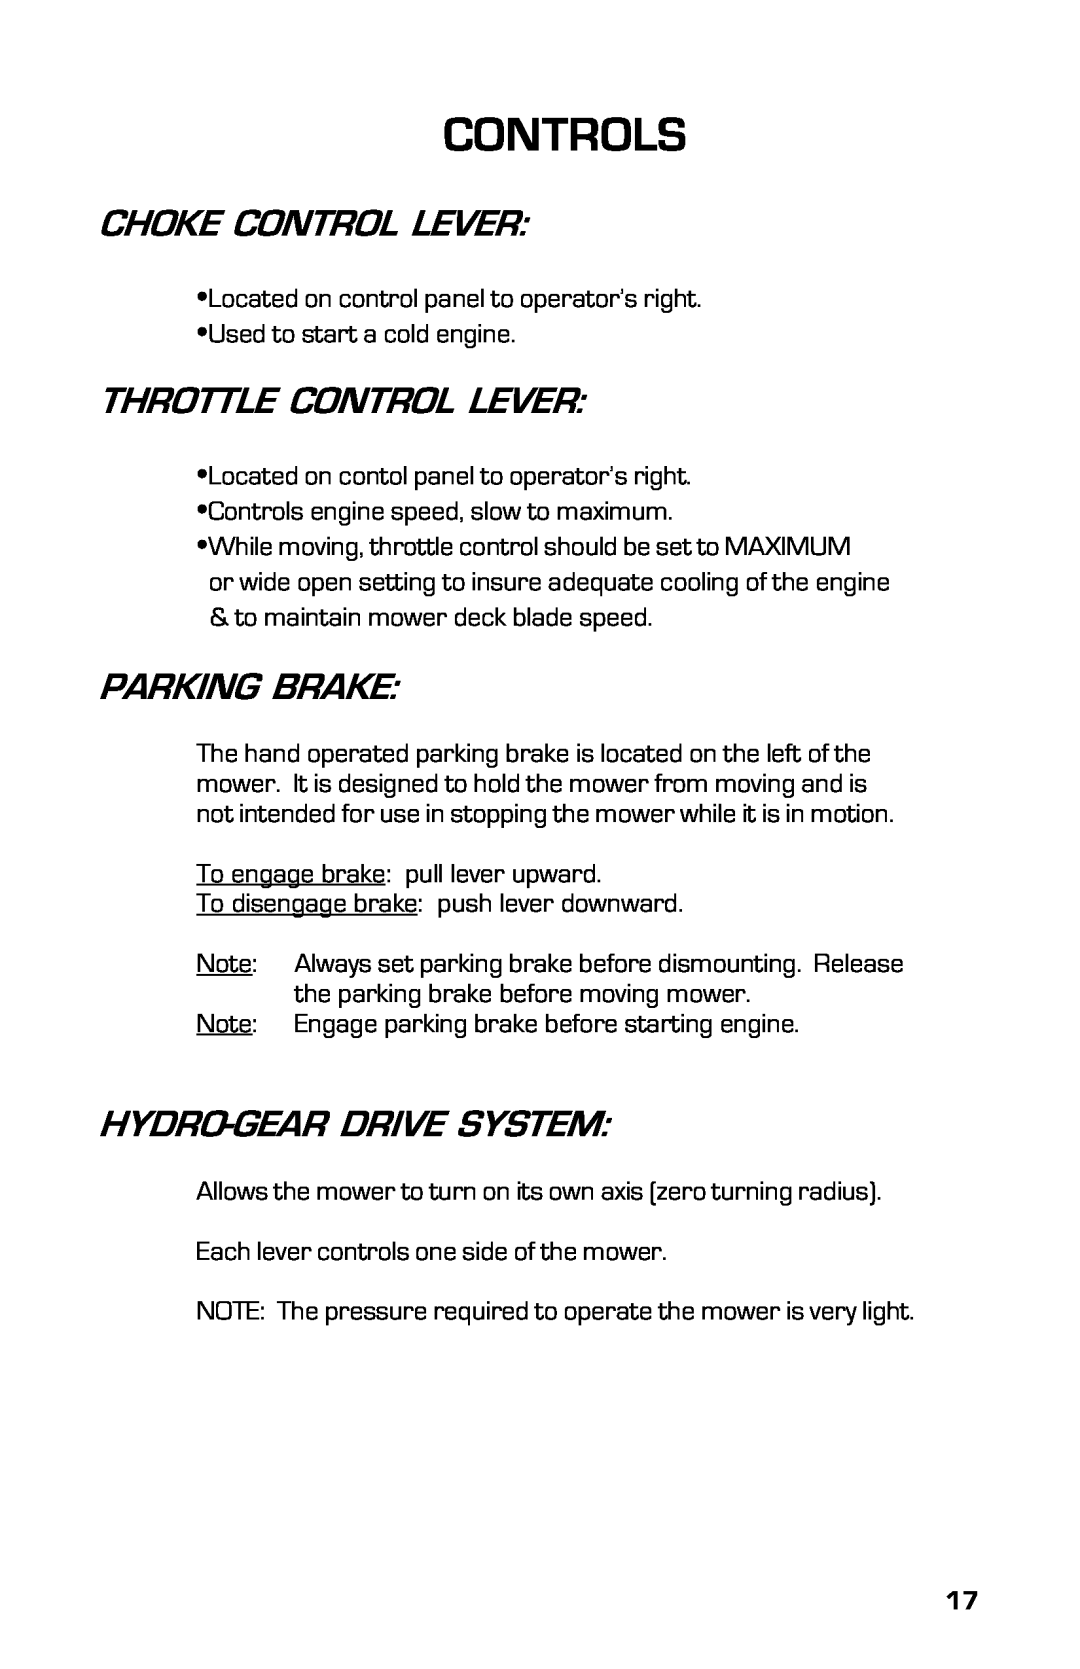 Dixon 13636-0702, ZTR 7525 Choke Control Lever, Throttle Control Lever, Parking Brake, Hydro-Gear Drive System, Controls 